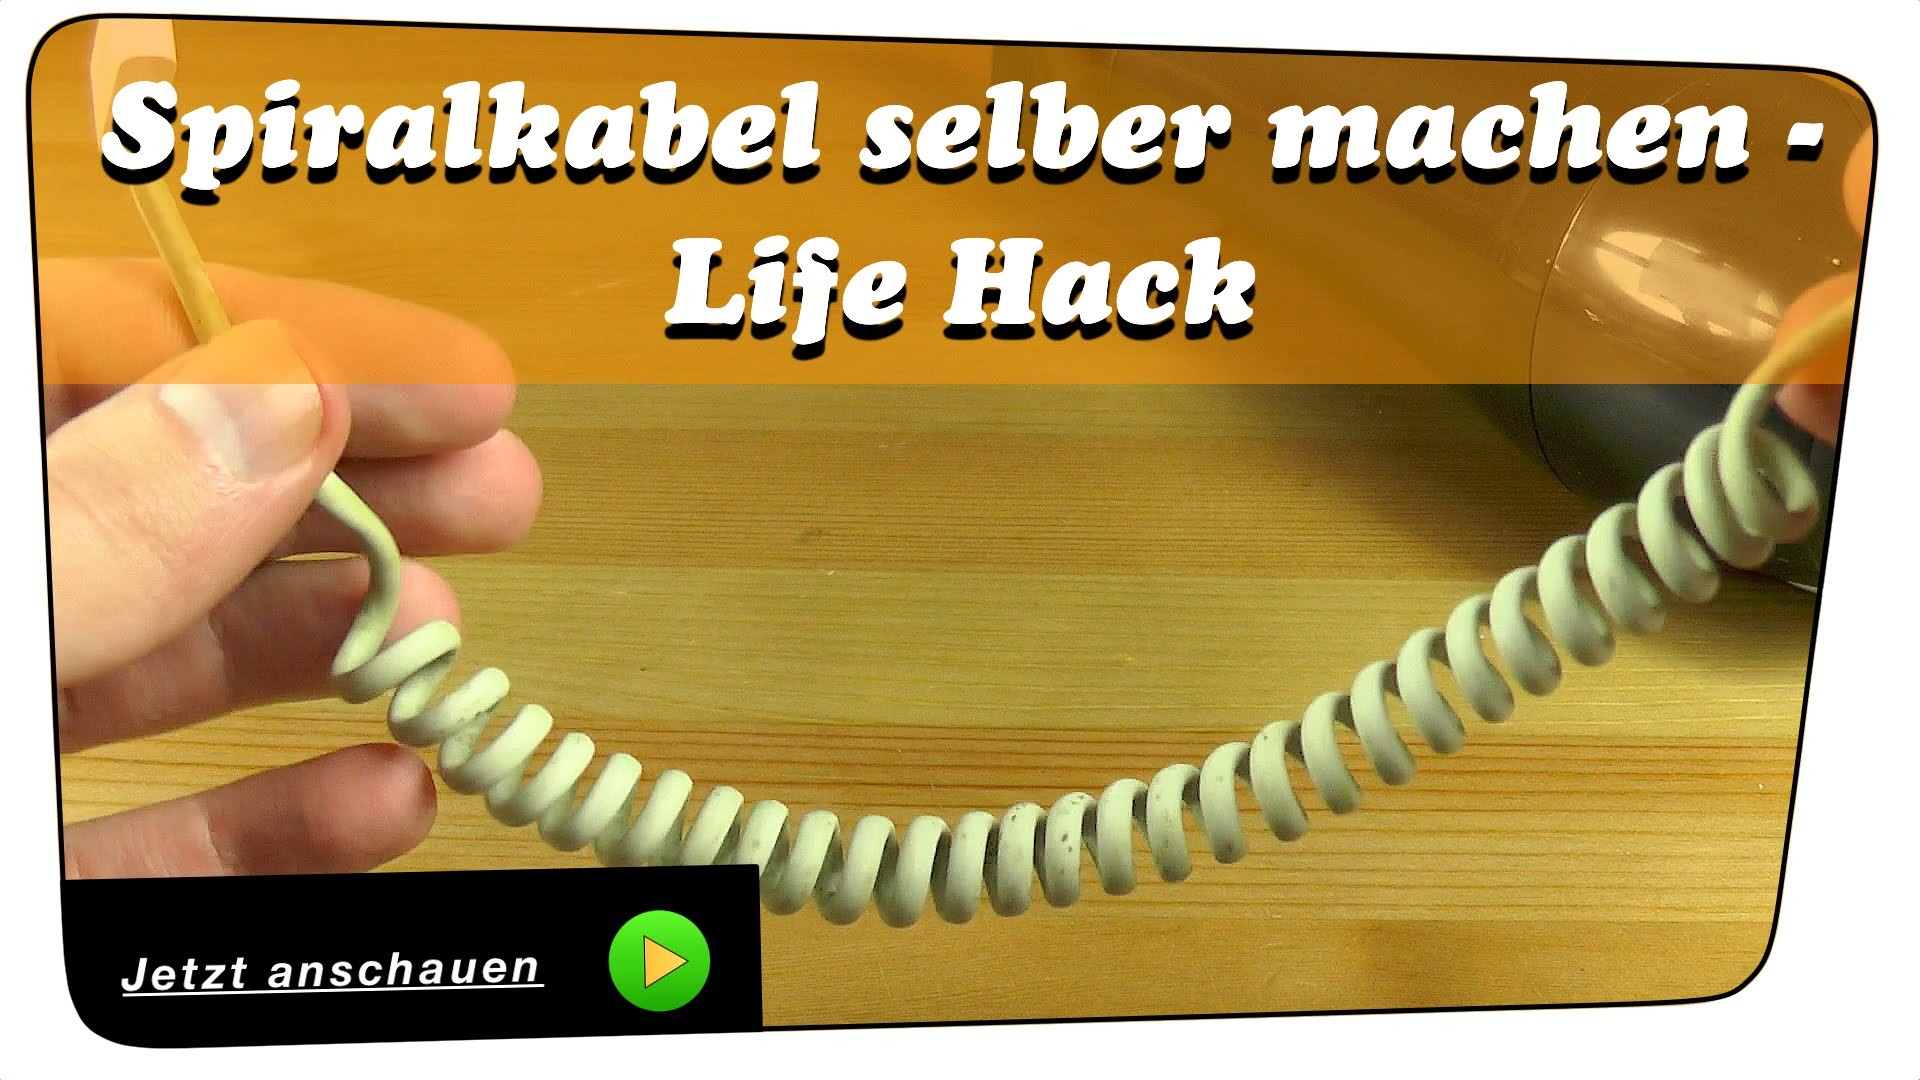 Spiralkabel selber machen - Life Hack | DIY